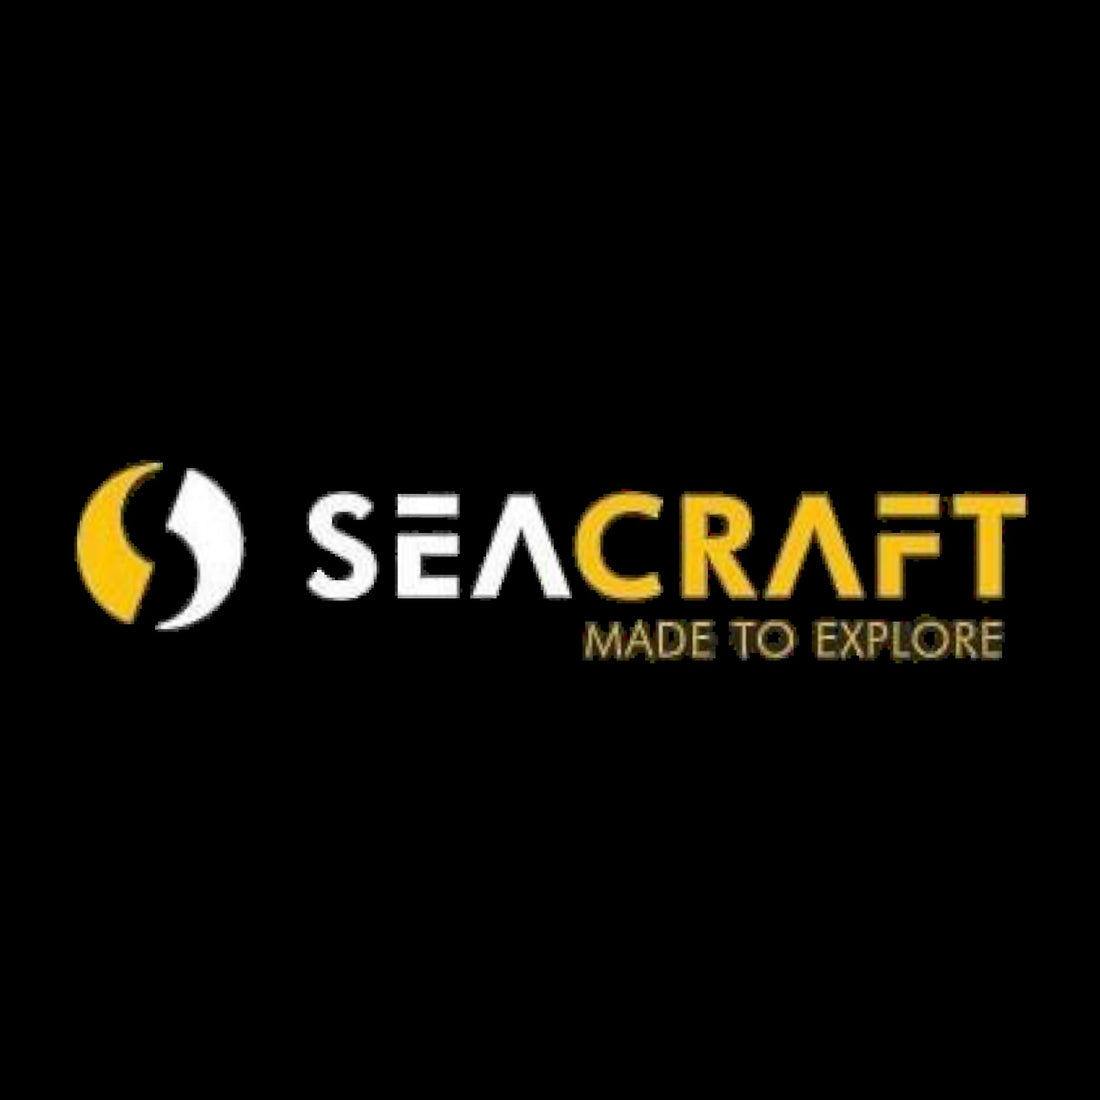  Seacraft